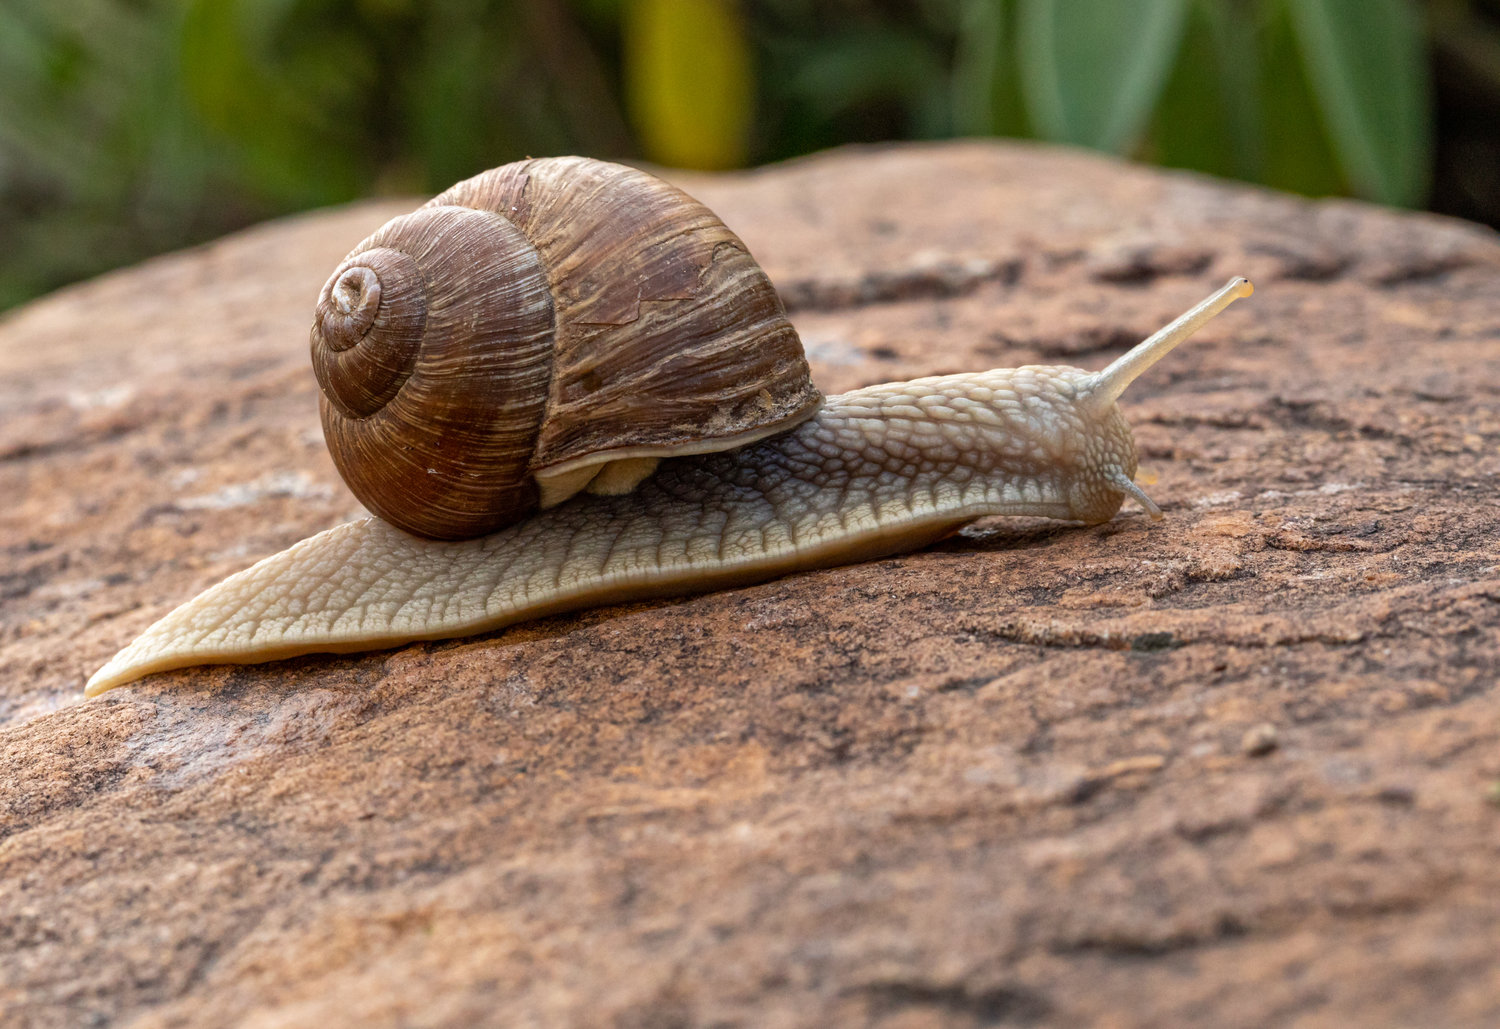 Roman snails are amongst us | Ecology by Design